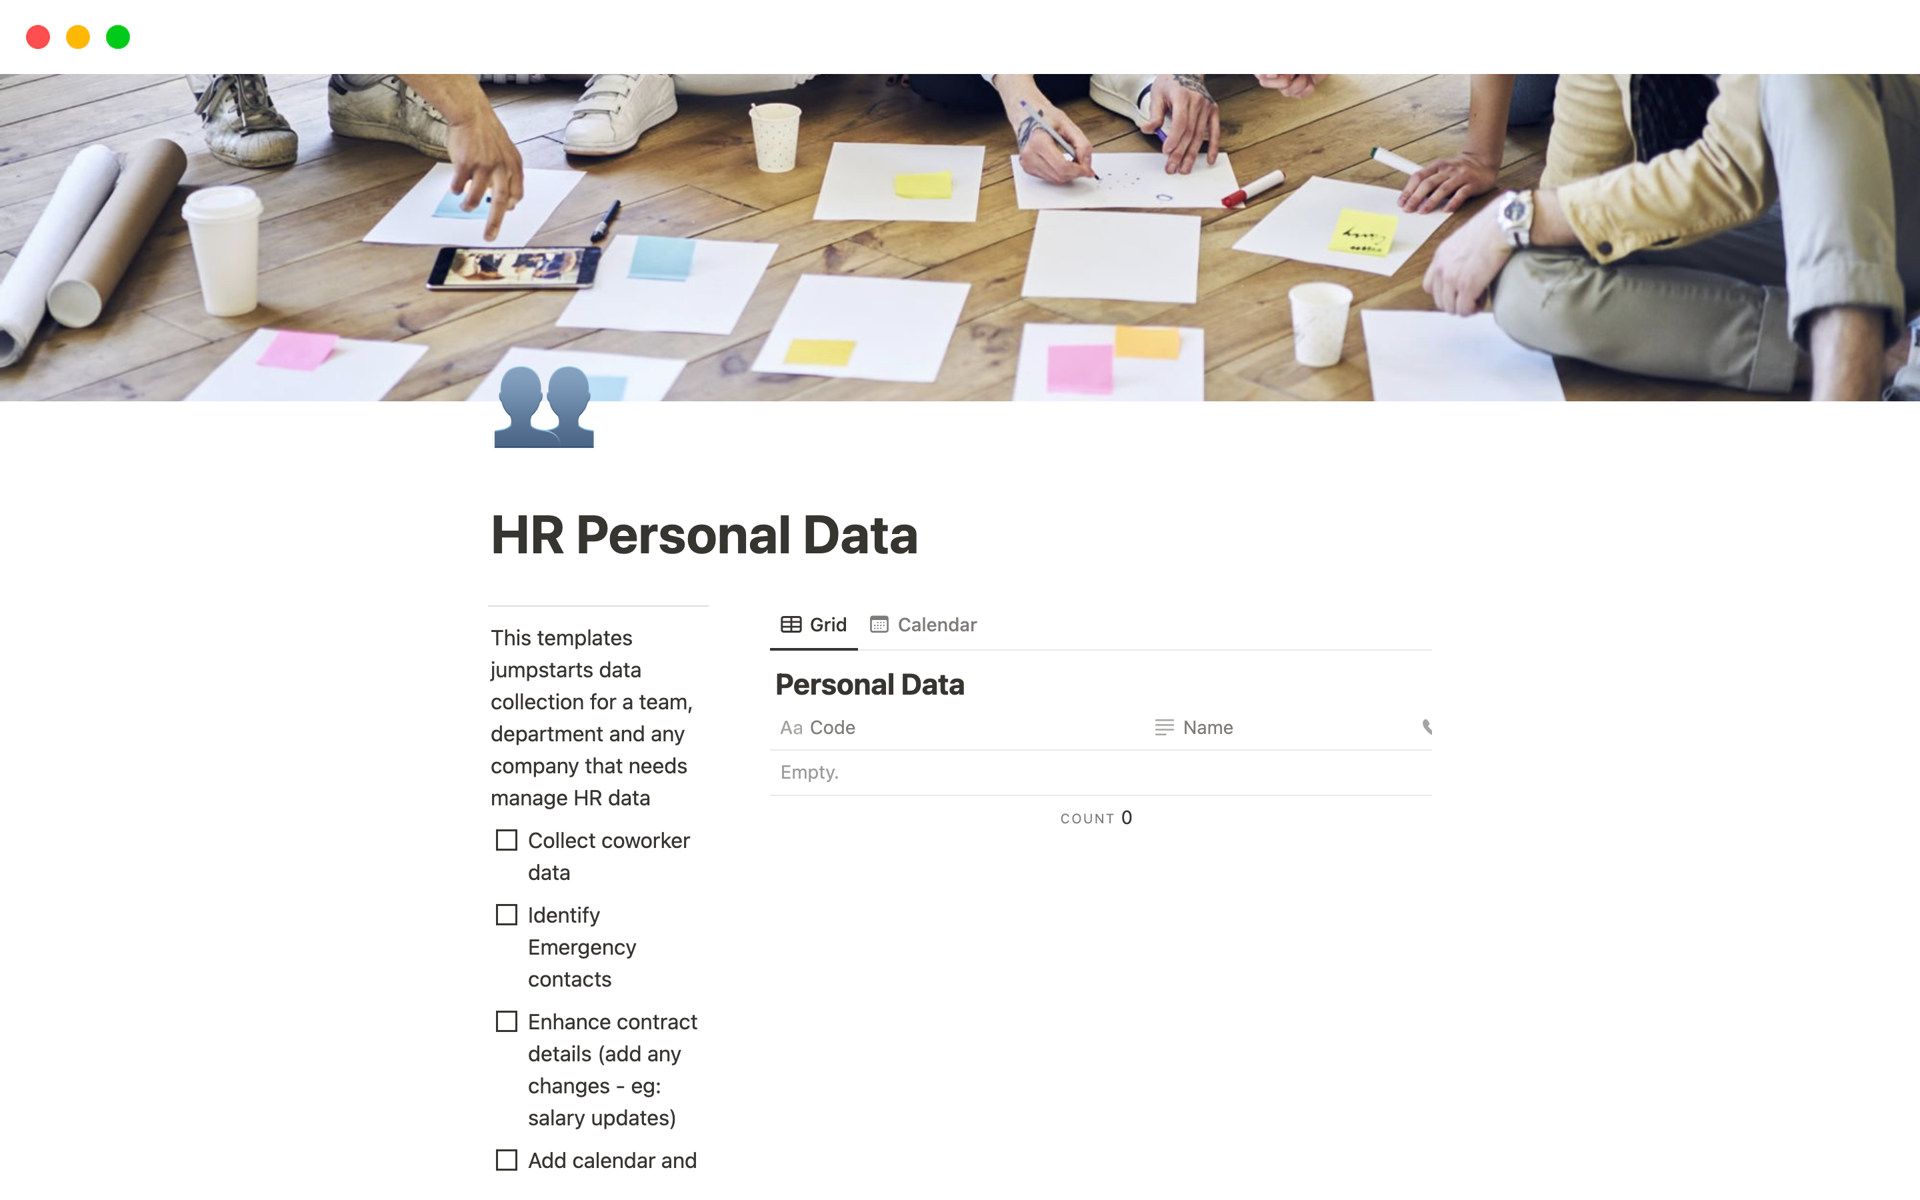 Vista previa de una plantilla para HR Personal Data